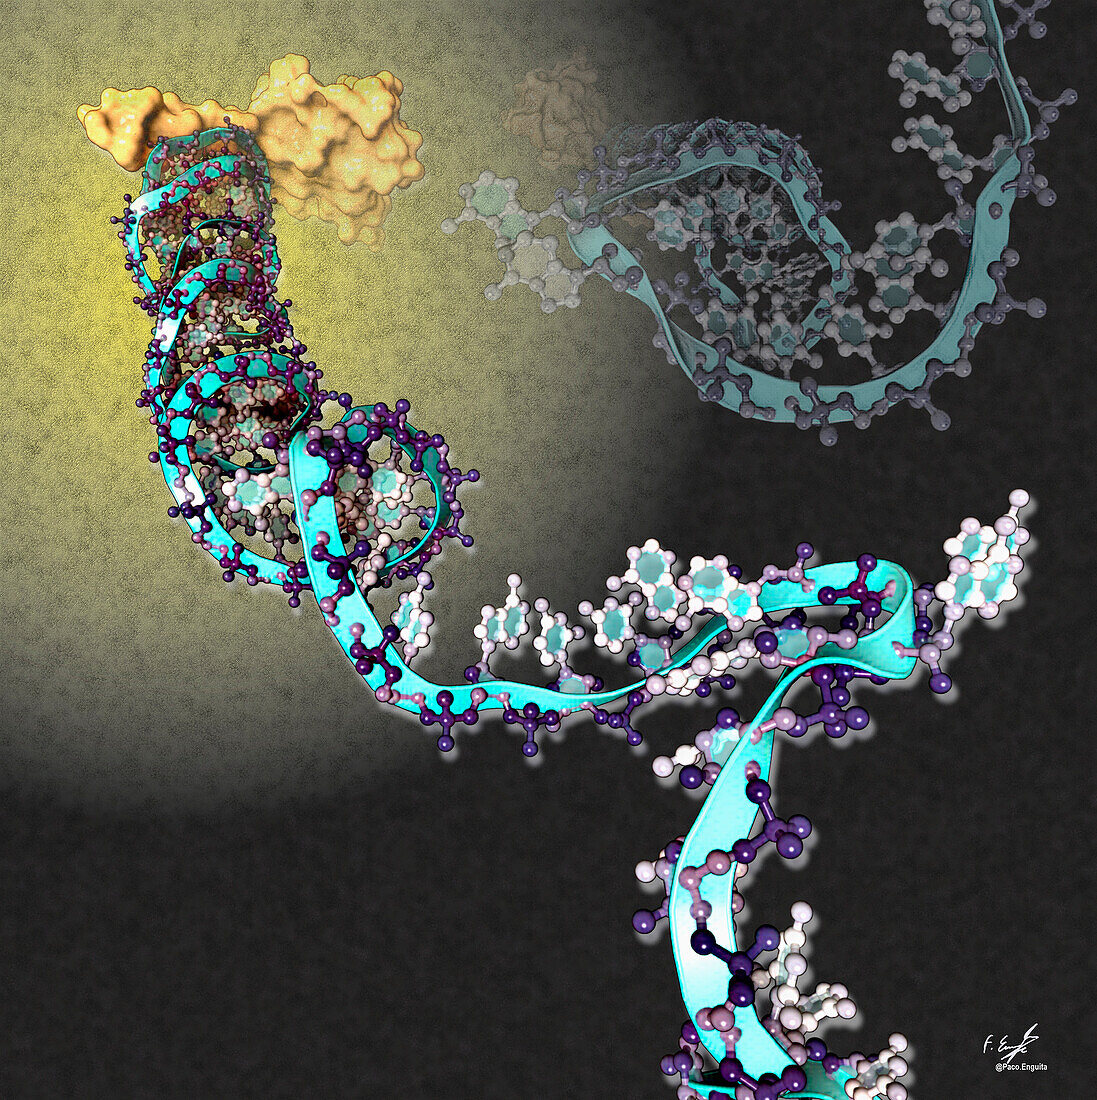 Nascent protein folding complex, illustration